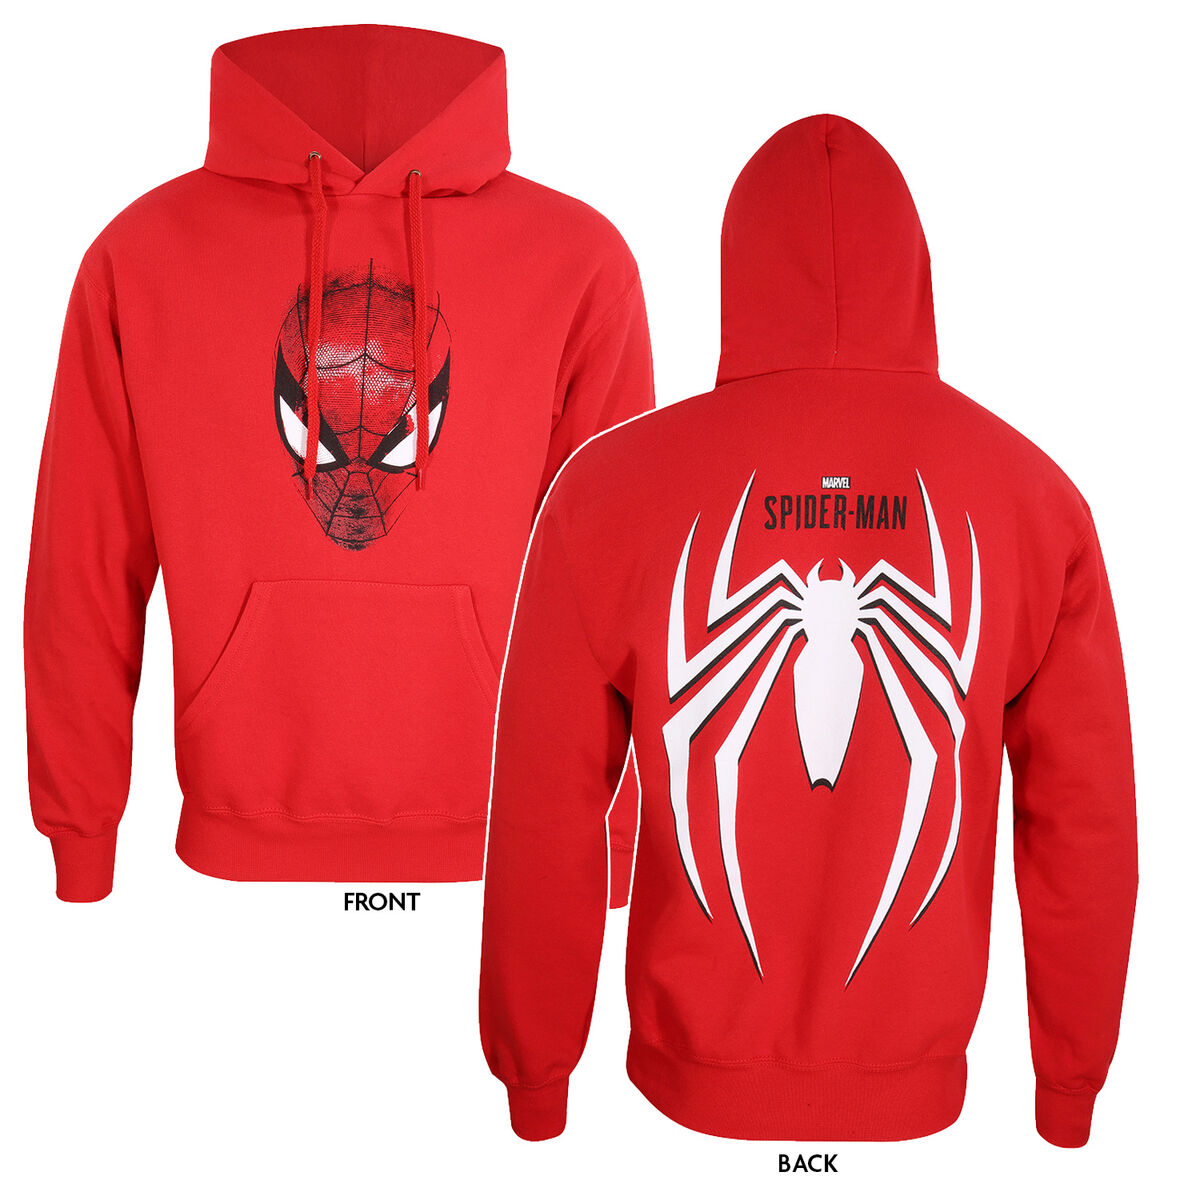 Polar Com Capuz Spider-man Spider Crest